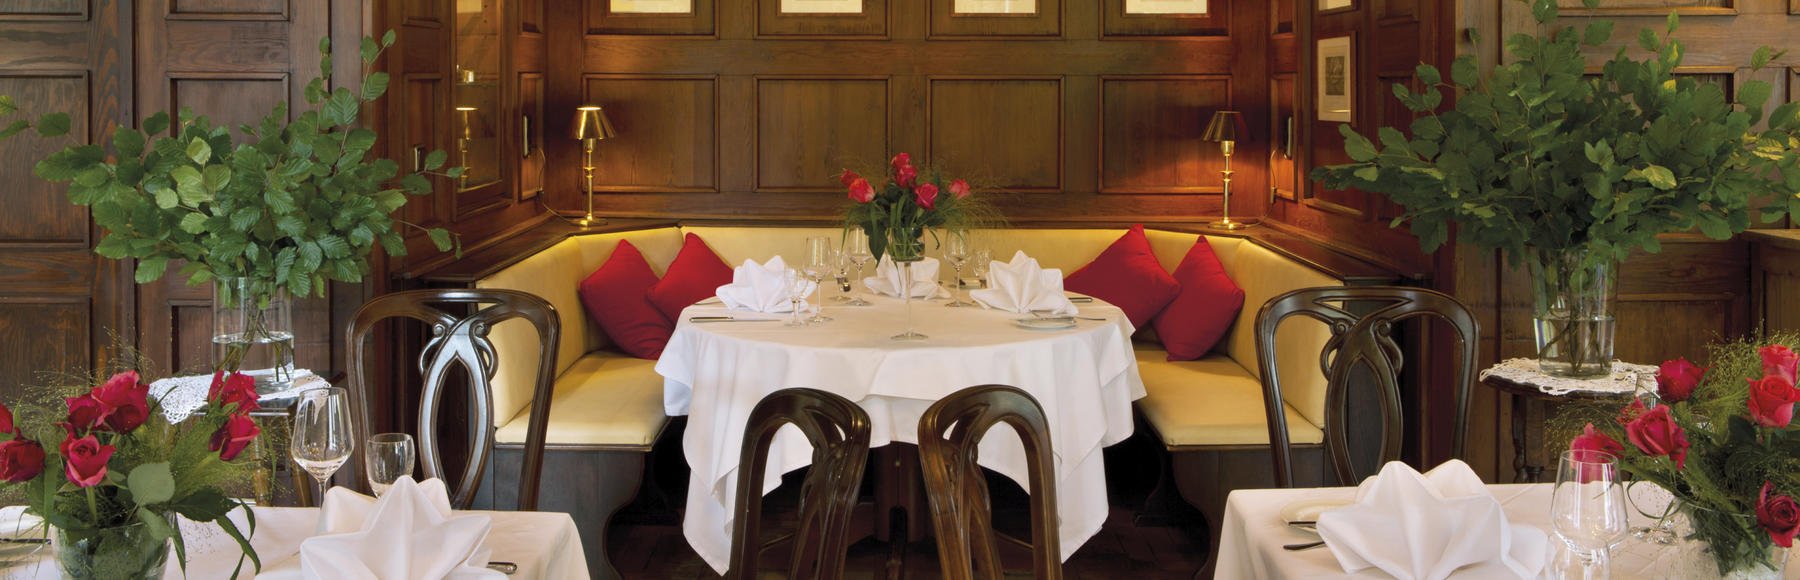 Restaurant Feengarten at the Romantik Hotel Jagdhaus Waldidyll